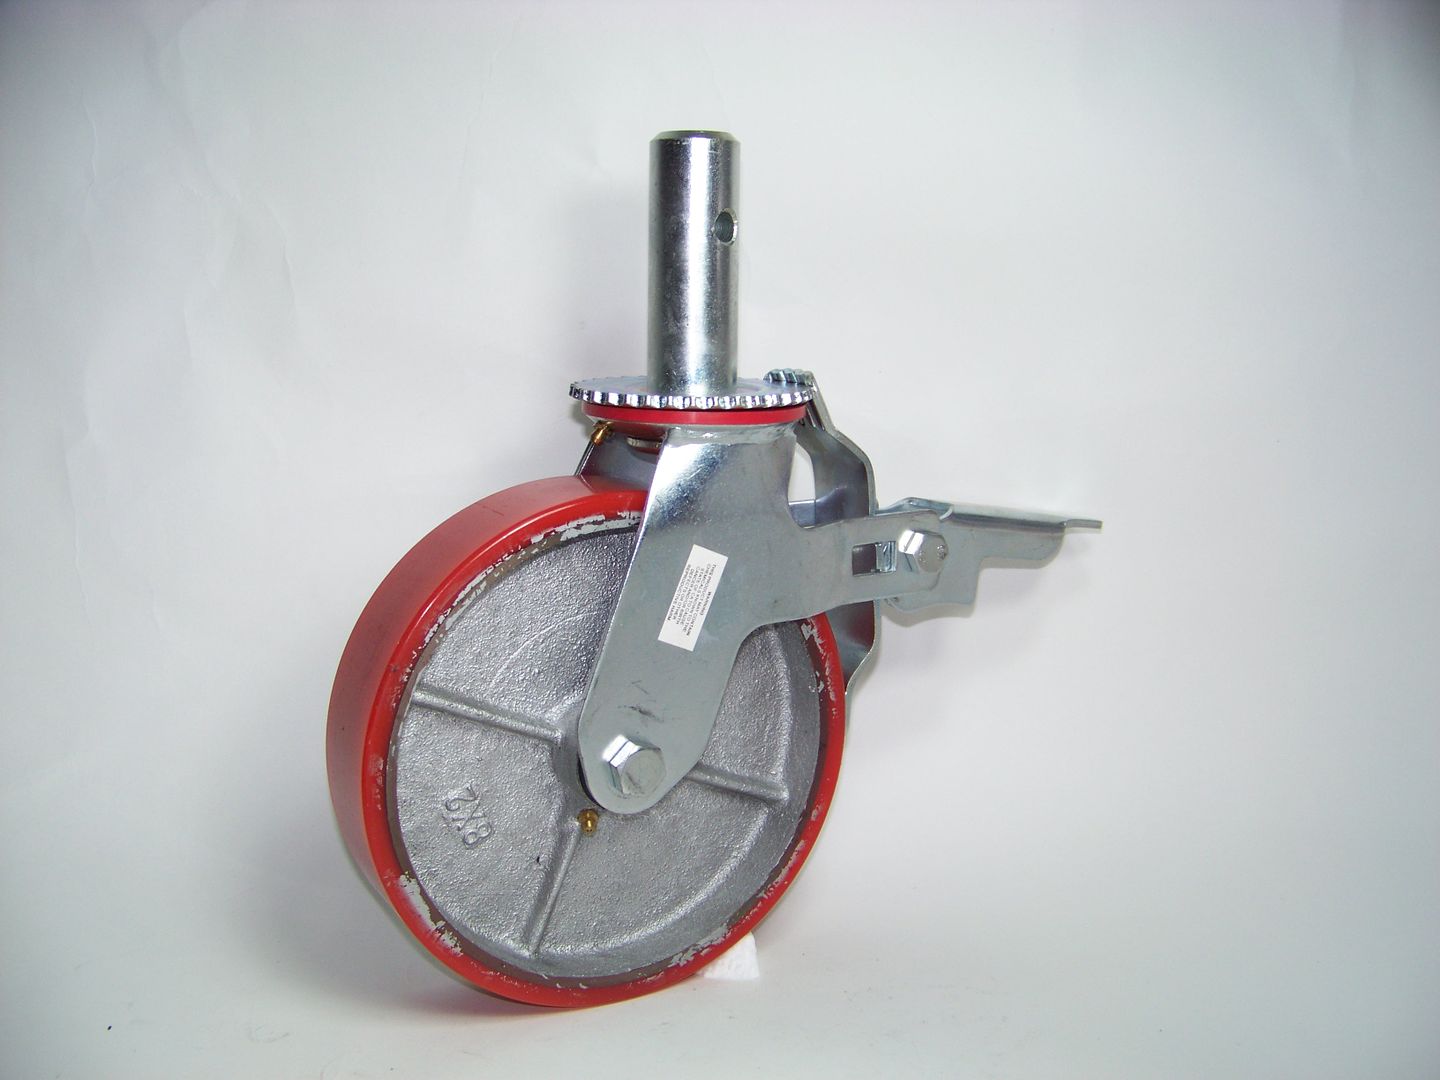   wheel locking mechanism simultaneously locks swivel and wheel solid